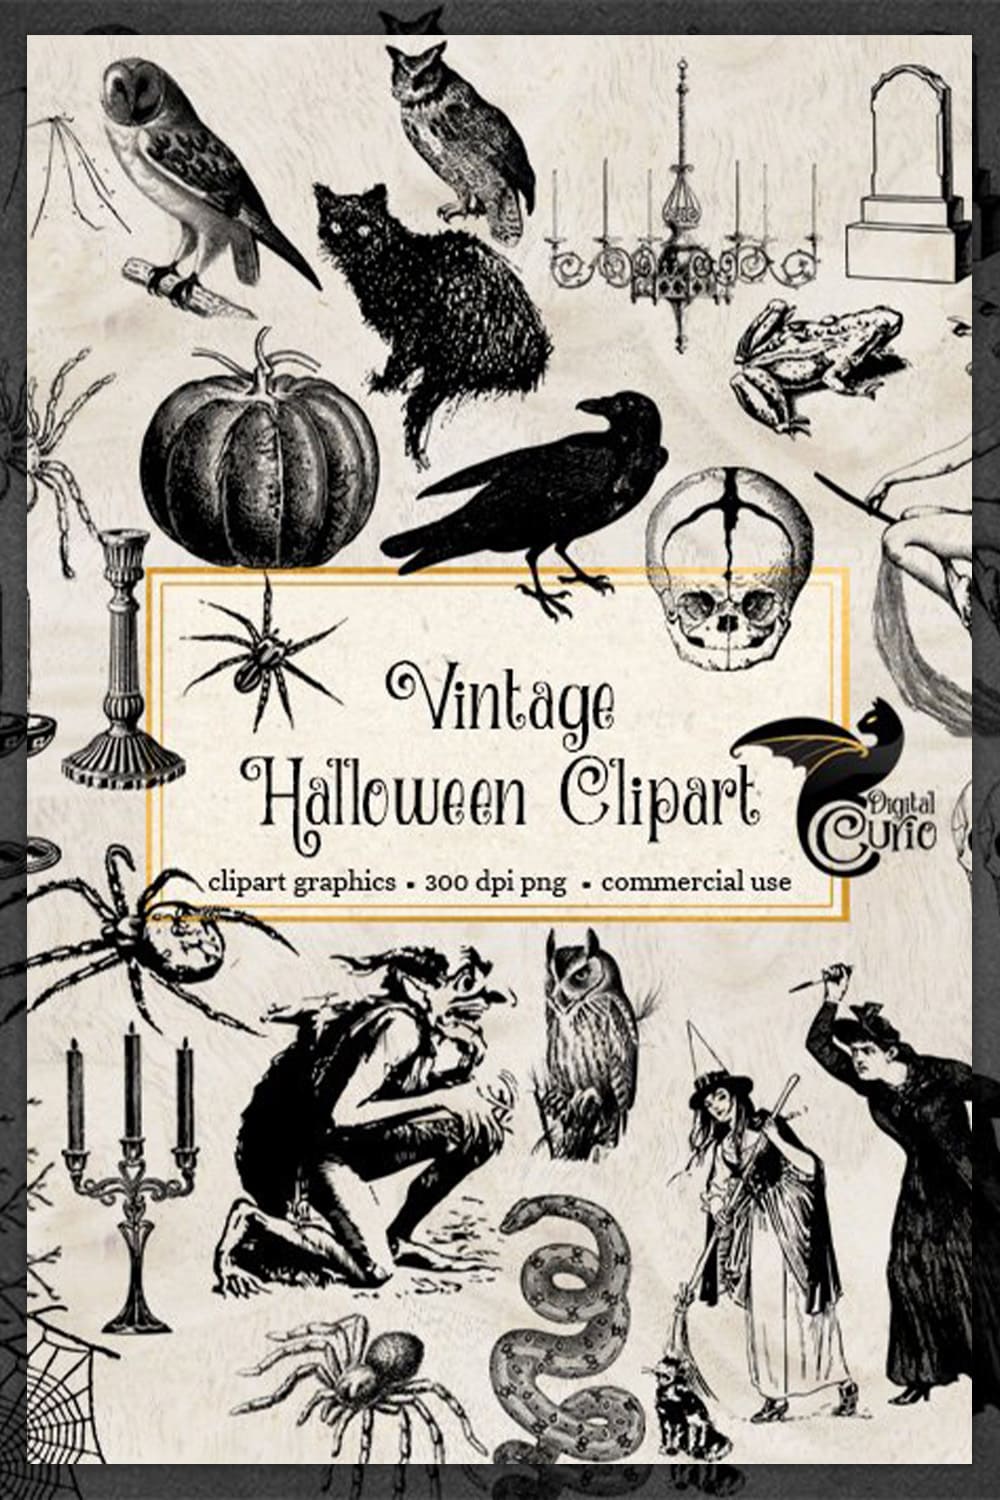 Vintage Halloween Clipart pinterest image.